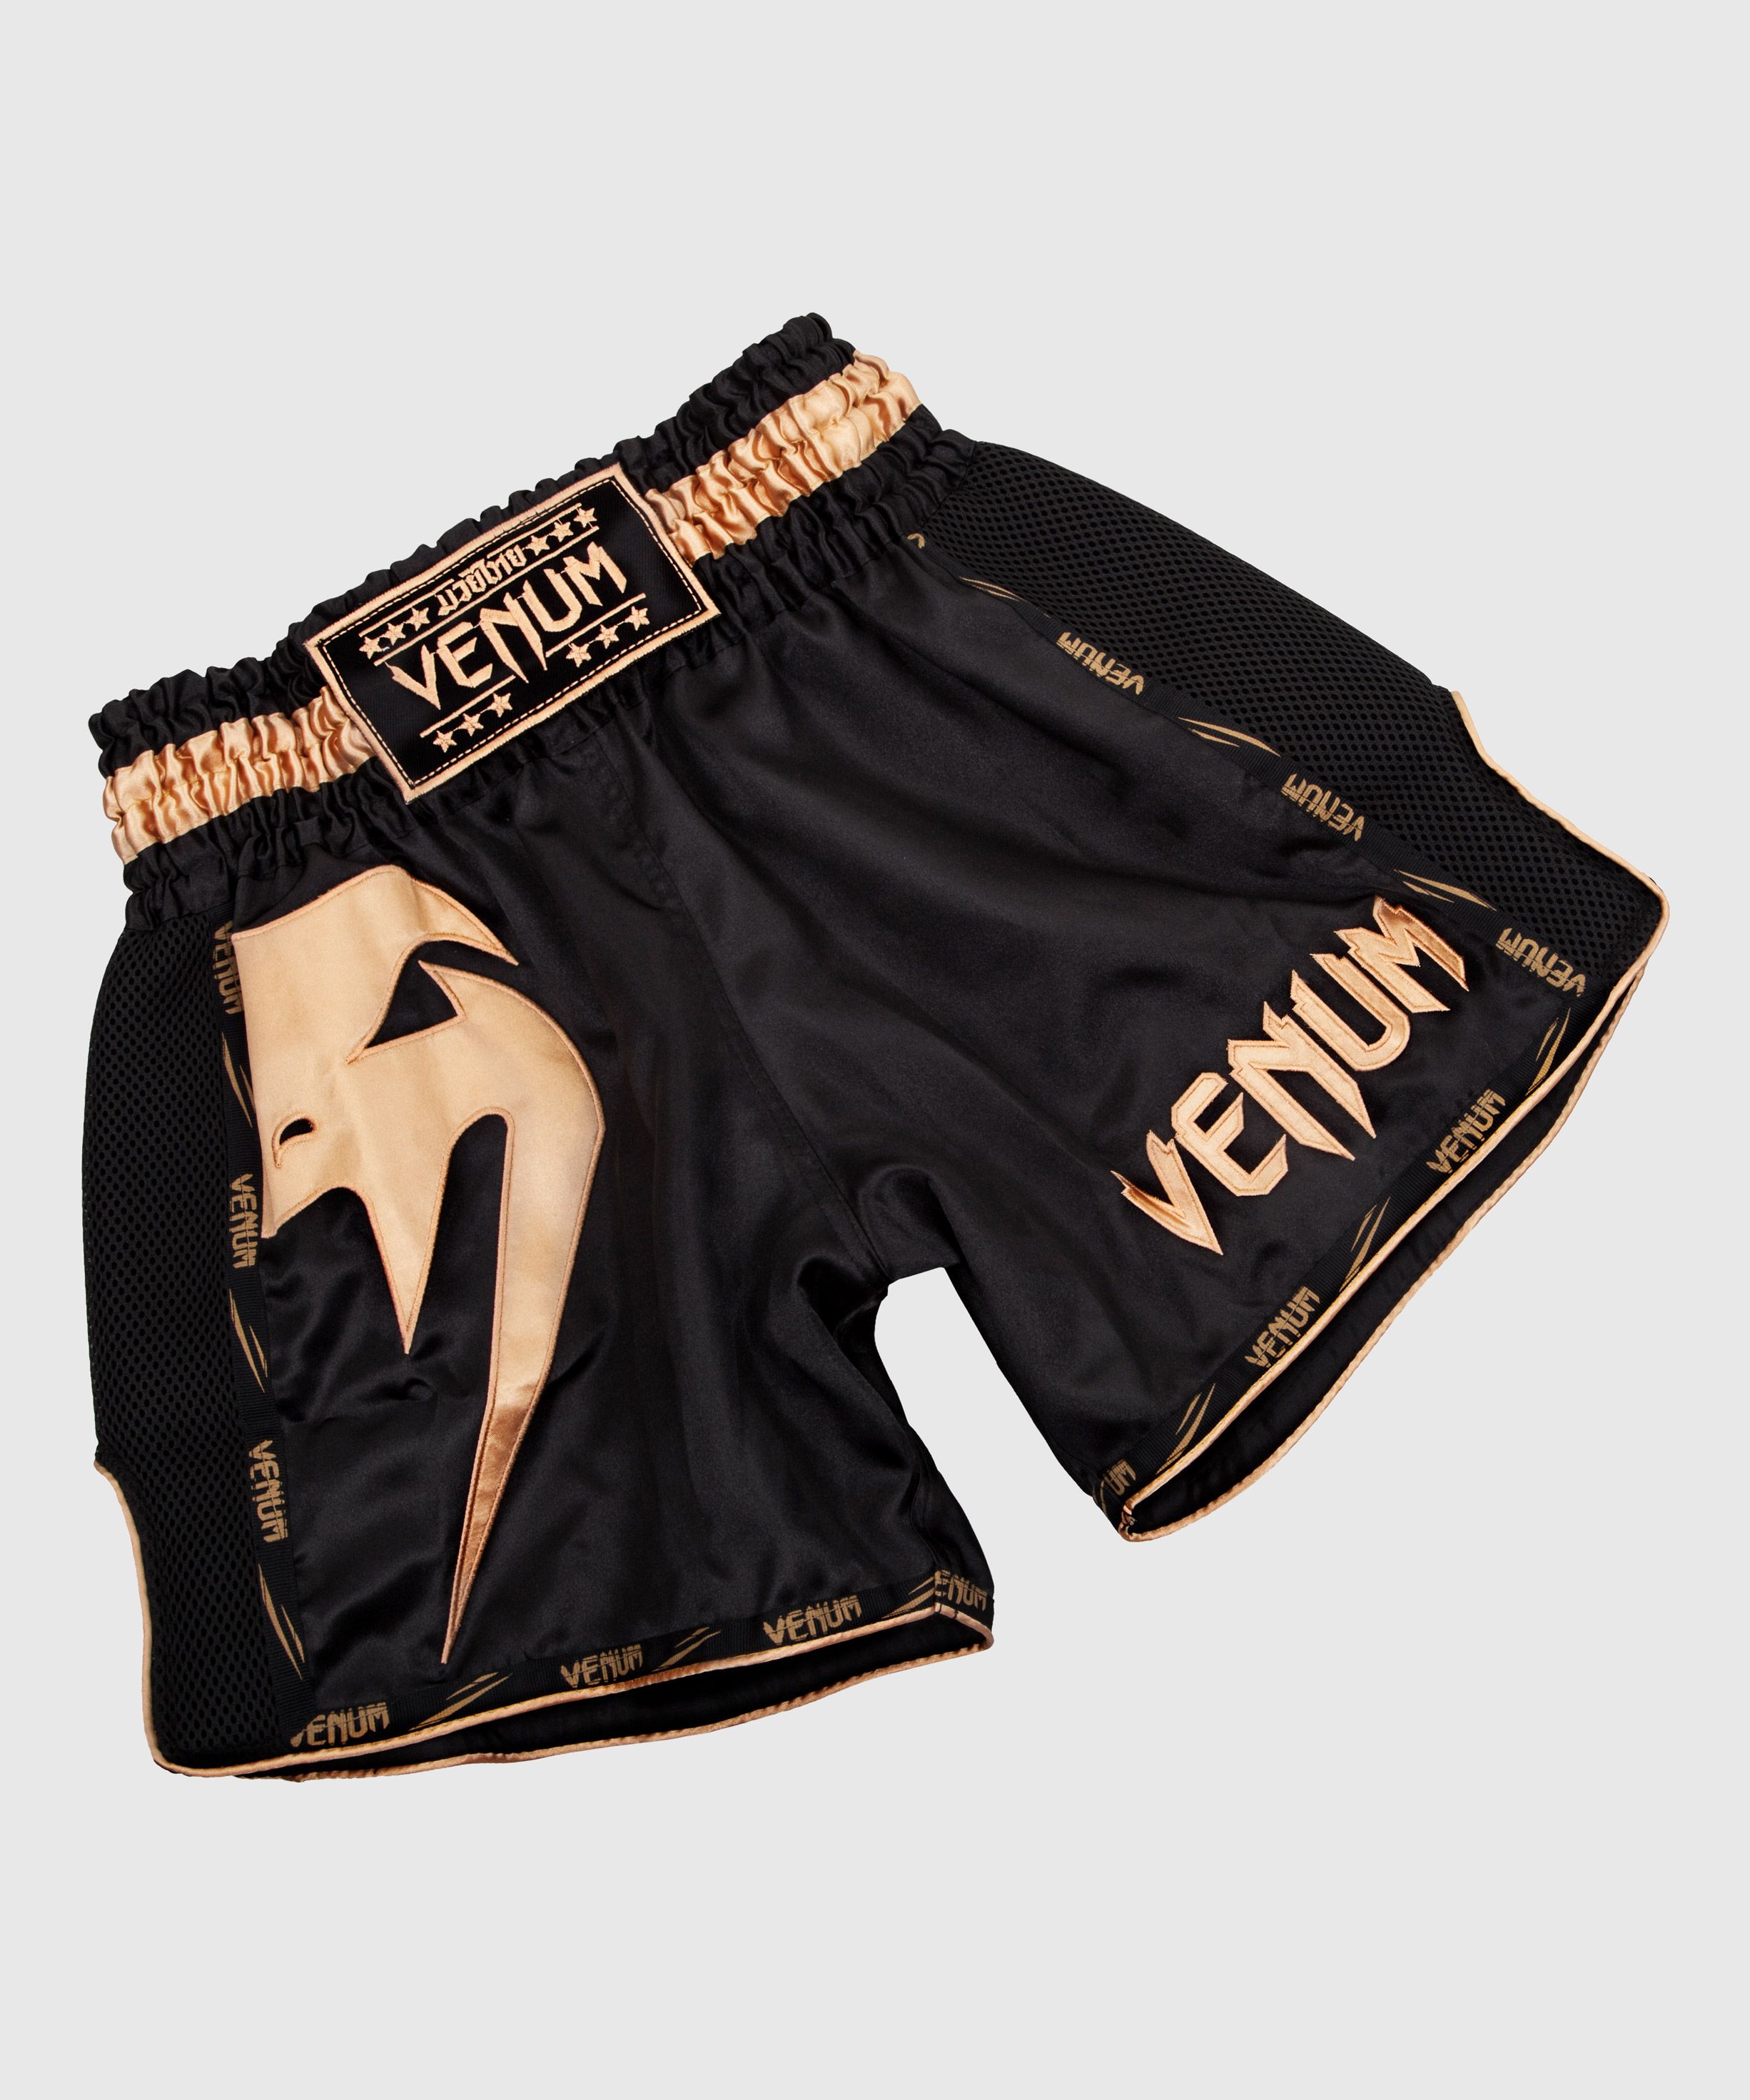 Venum Giant Muay Thai Short - Zwart/Goud